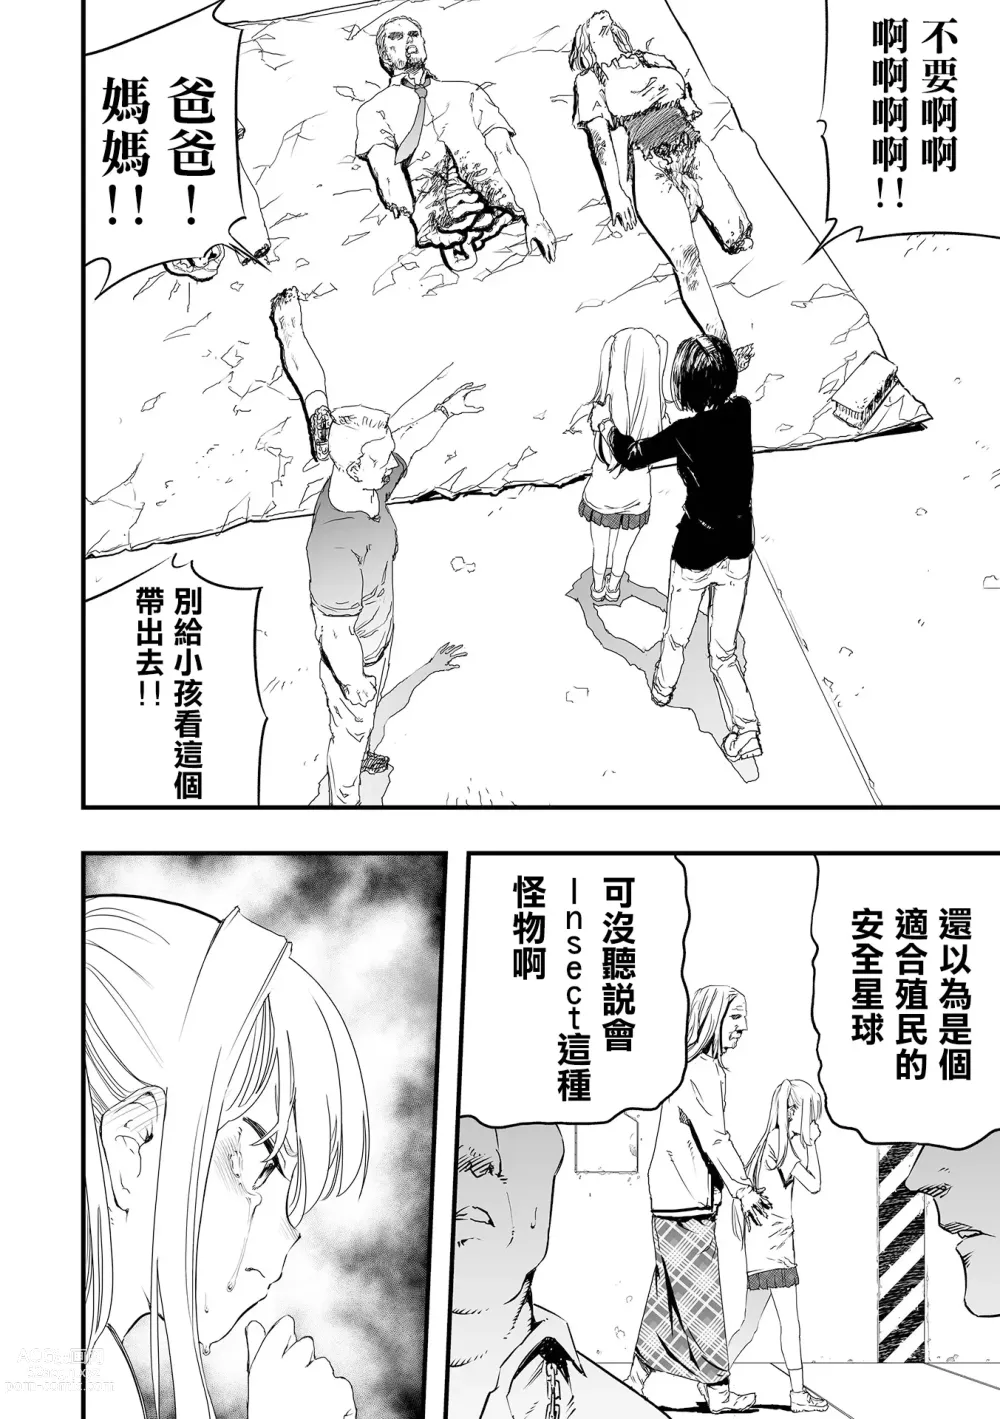 Page 5 of manga 防彈帶士兵團